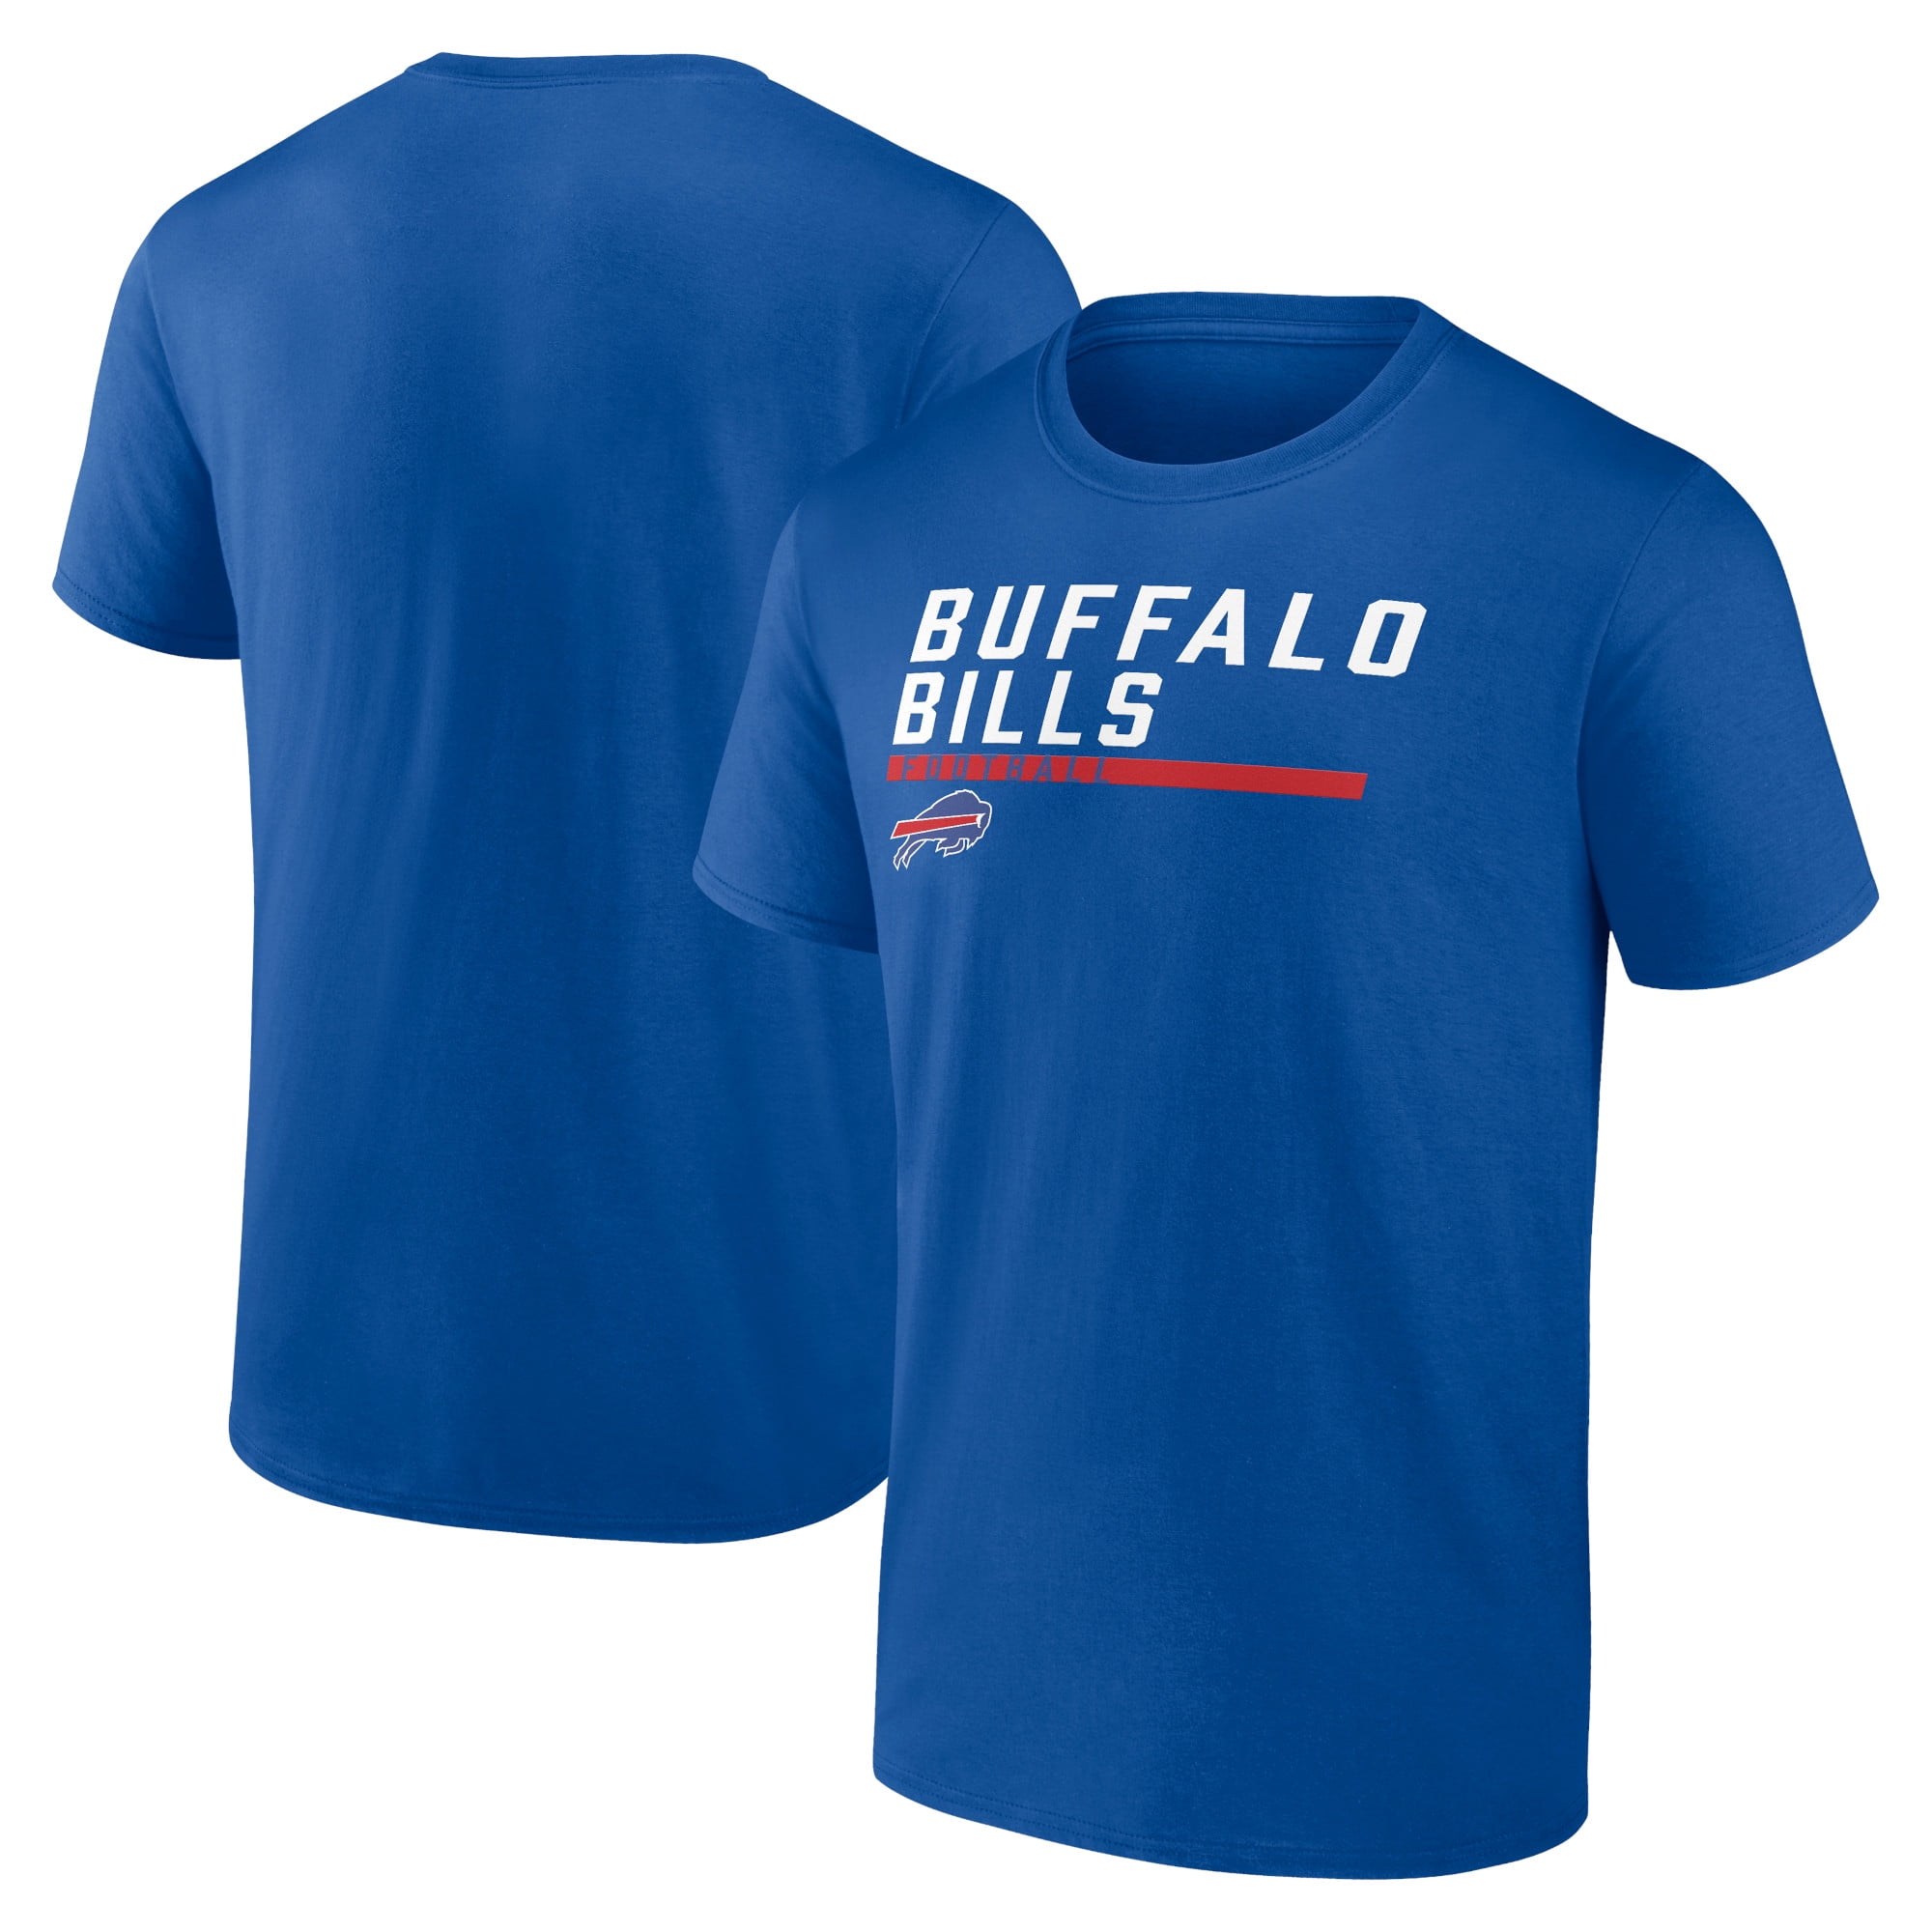 Men's Fanatics Branded Royal Buffalo Bills Stacked T-Shirt - Walmart.com